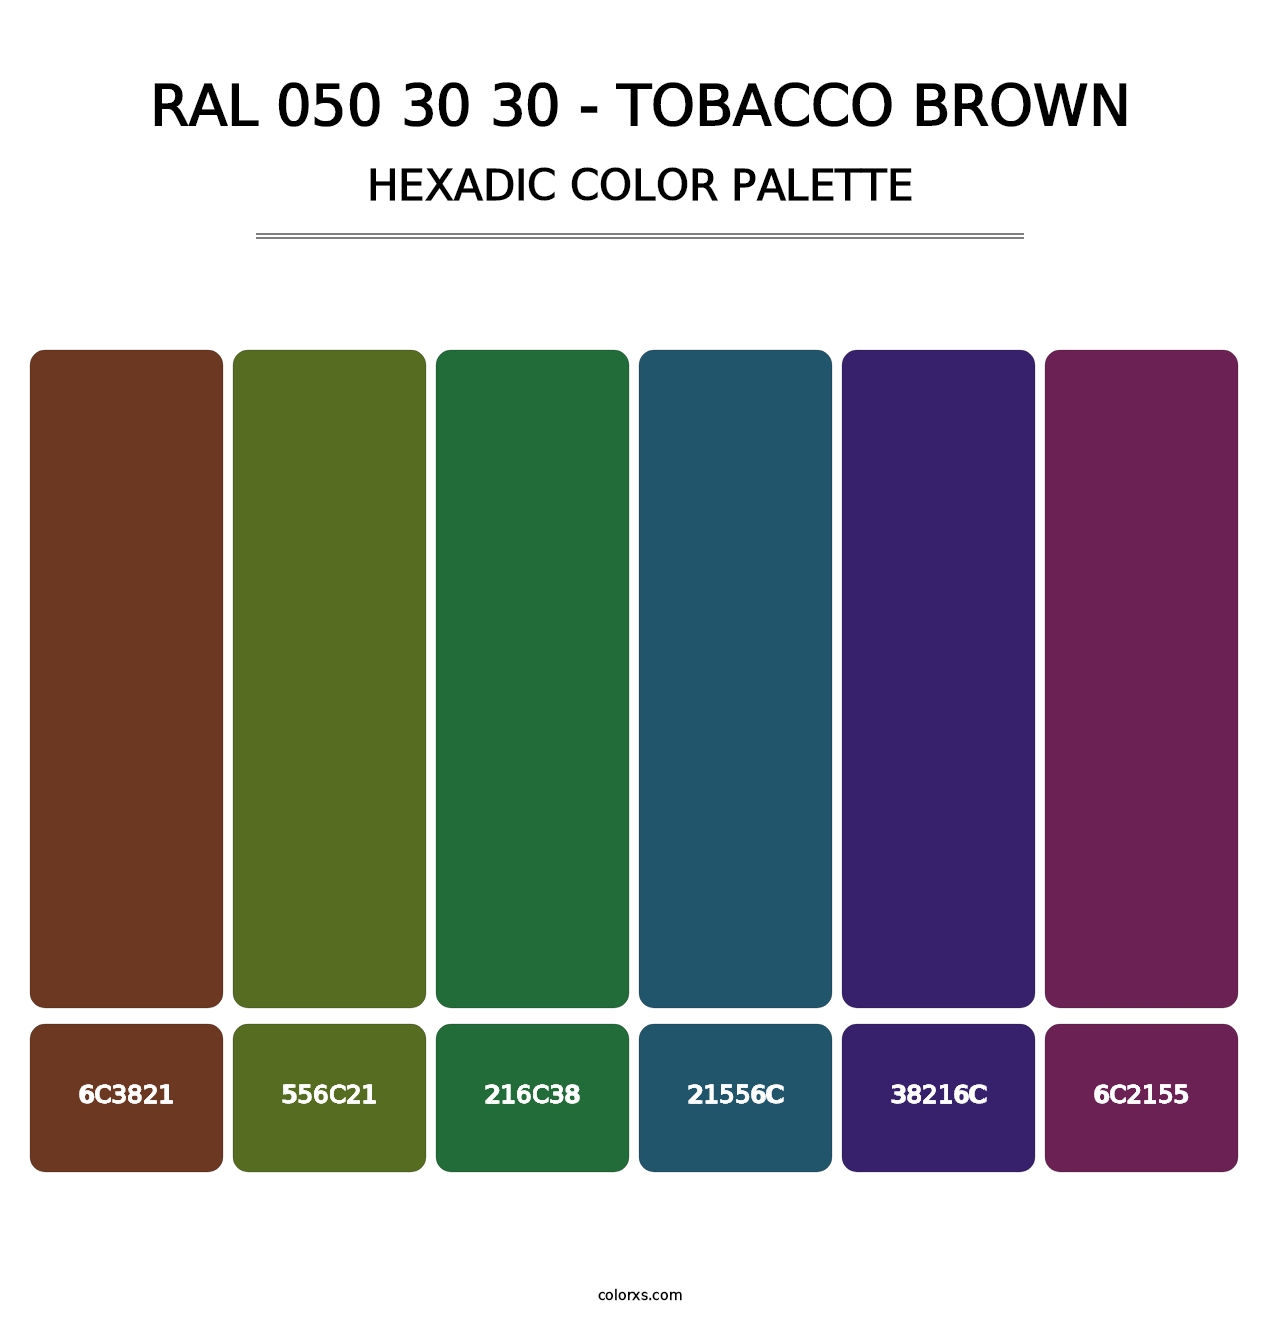 RAL 050 30 30 - Tobacco Brown - Hexadic Color Palette